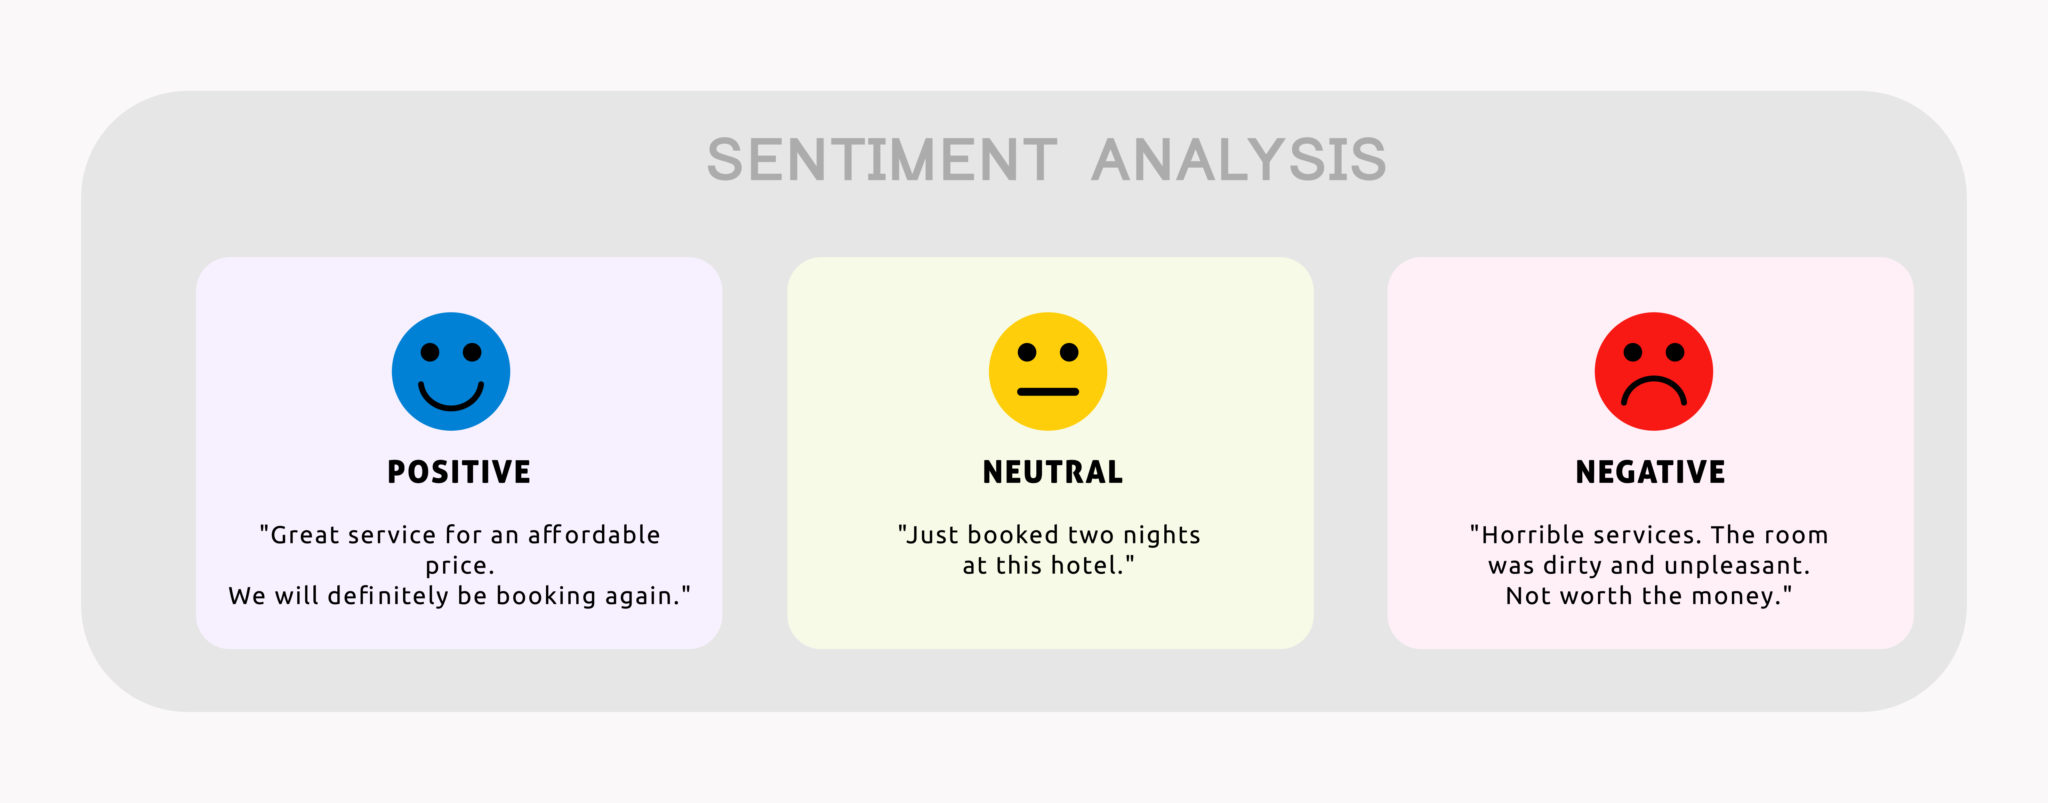 researchgate sentiment analysis